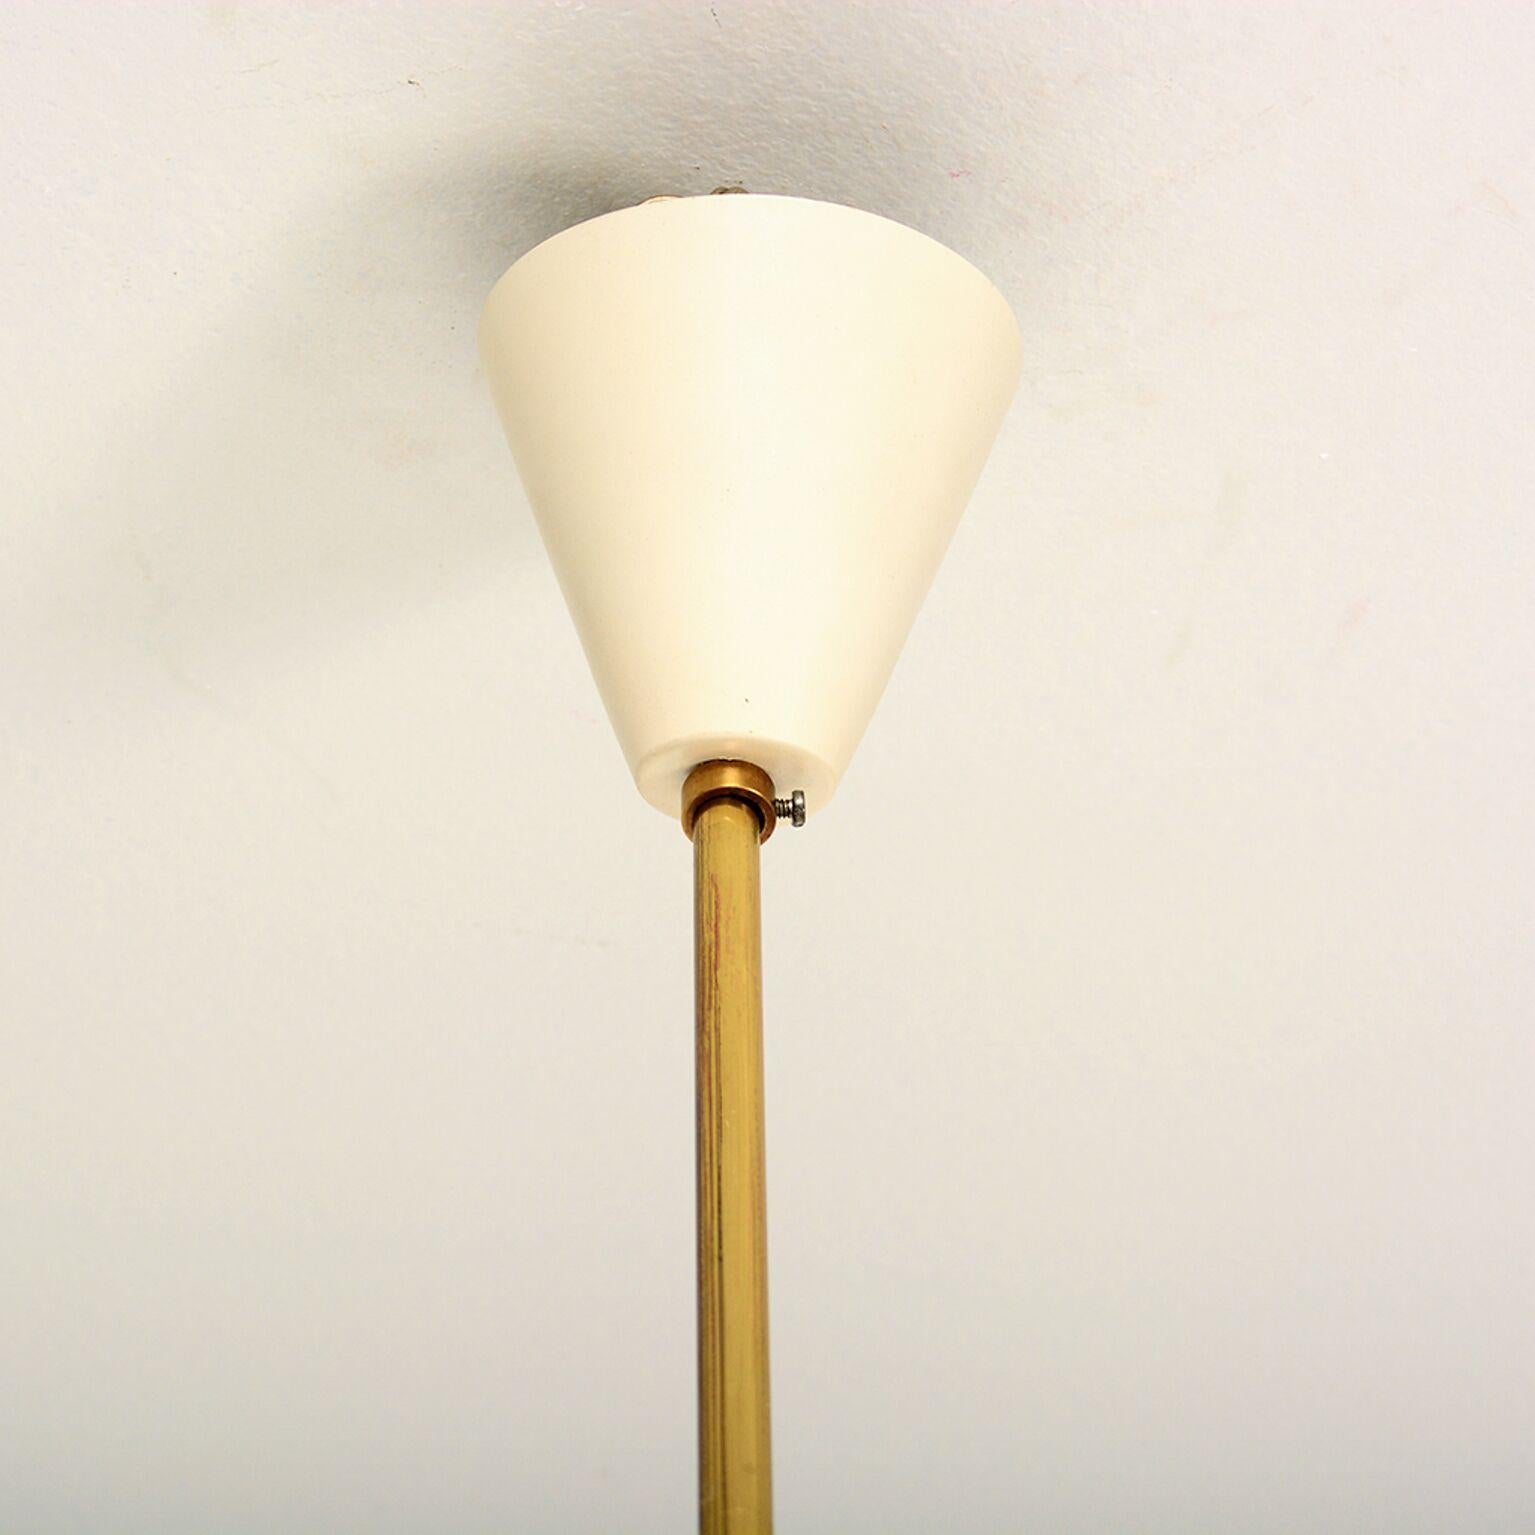  1950s Italian Sputnik Chandelier Lamp by Stilnovo For Sale 2